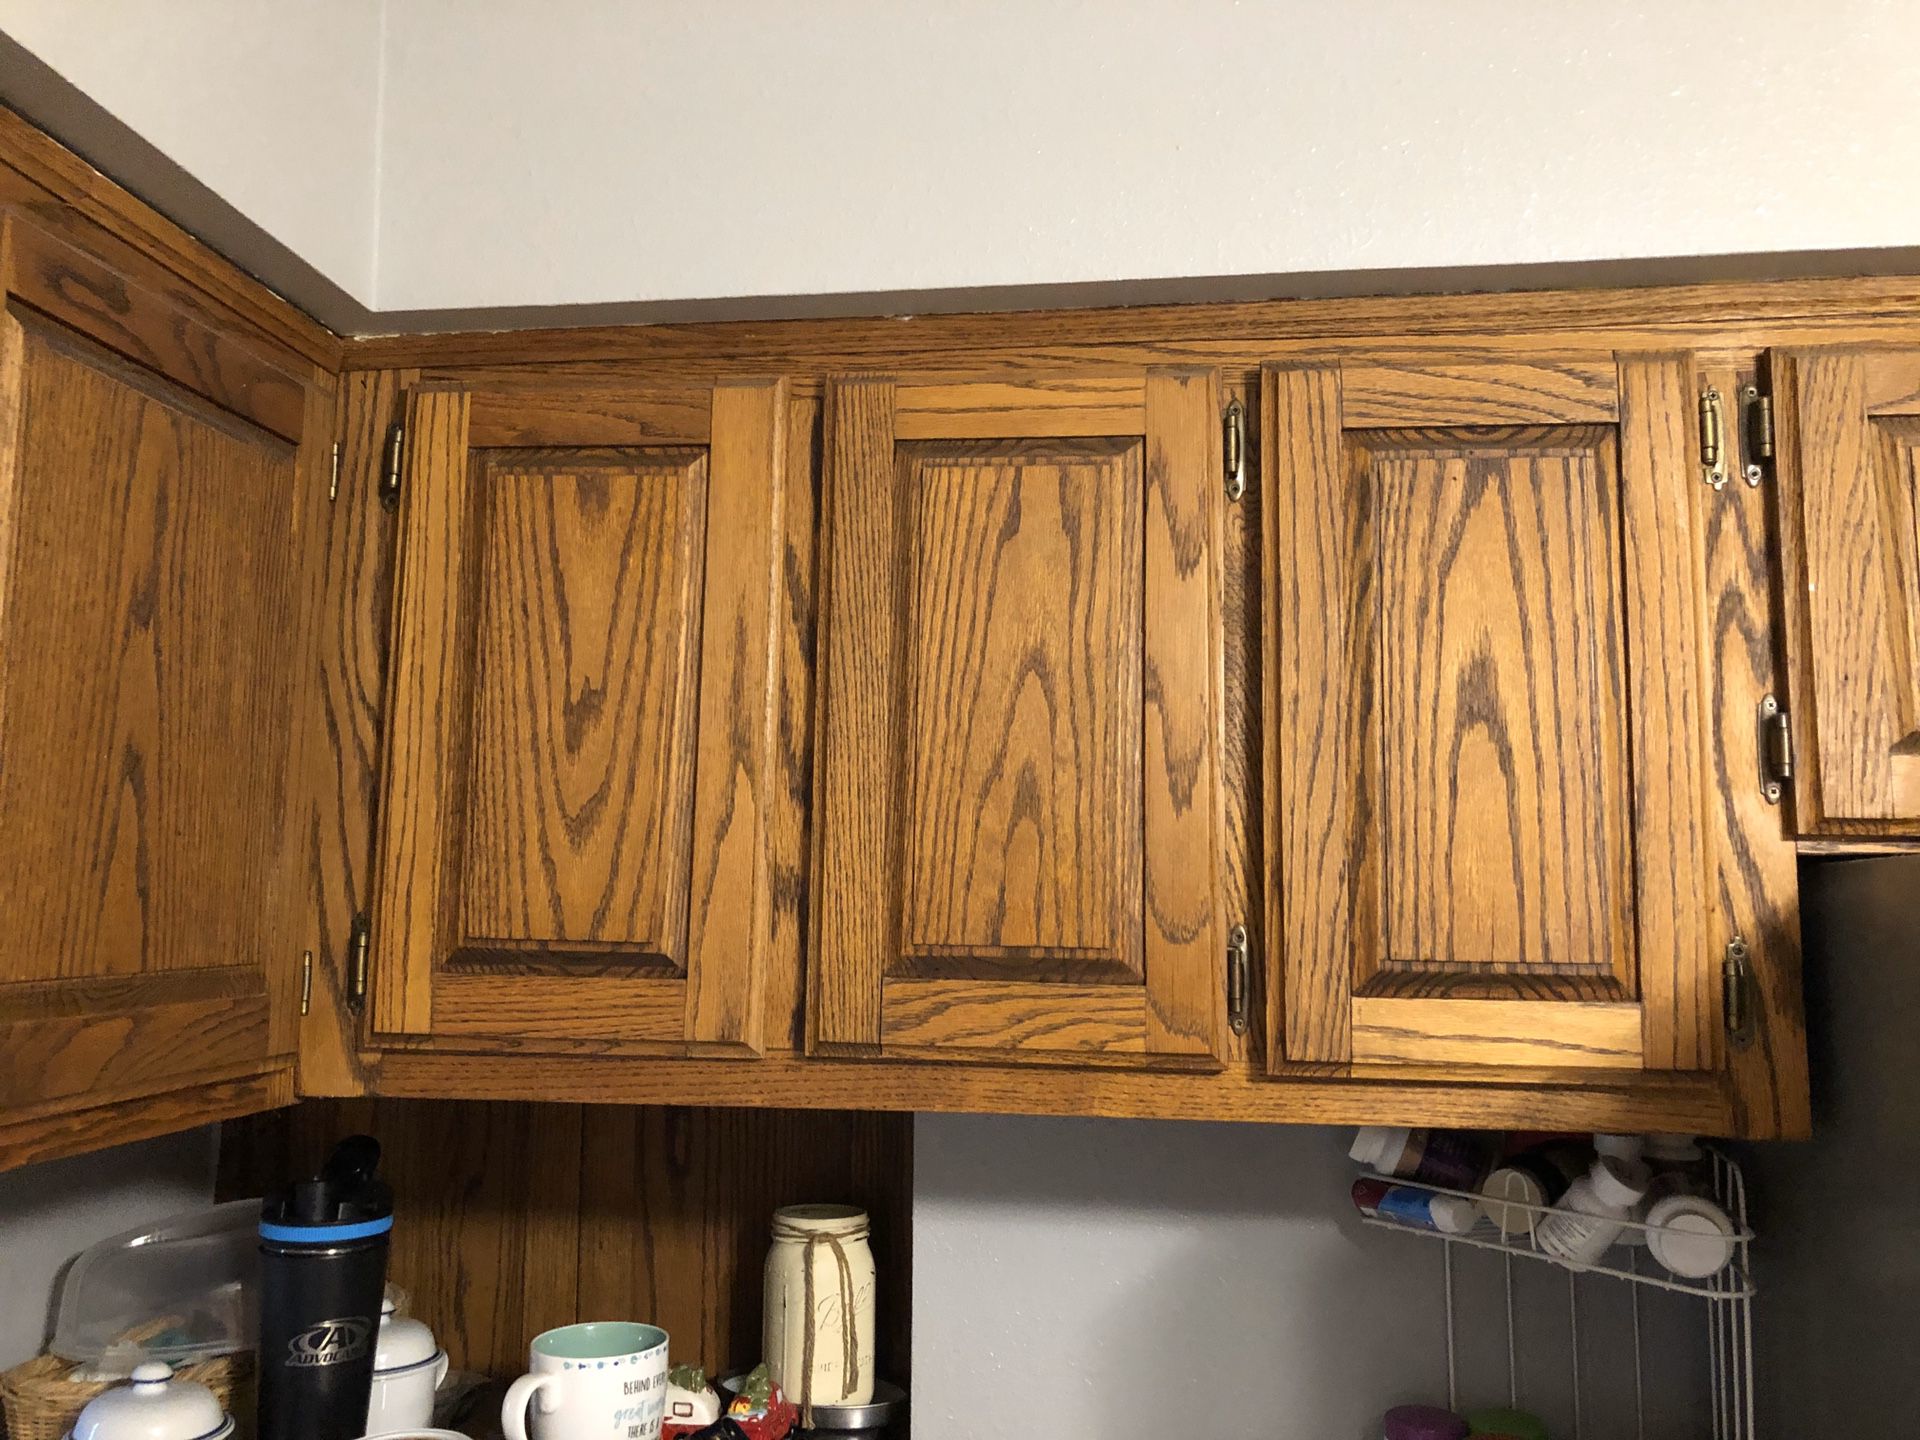 Oak kitchen cabinets with appliances